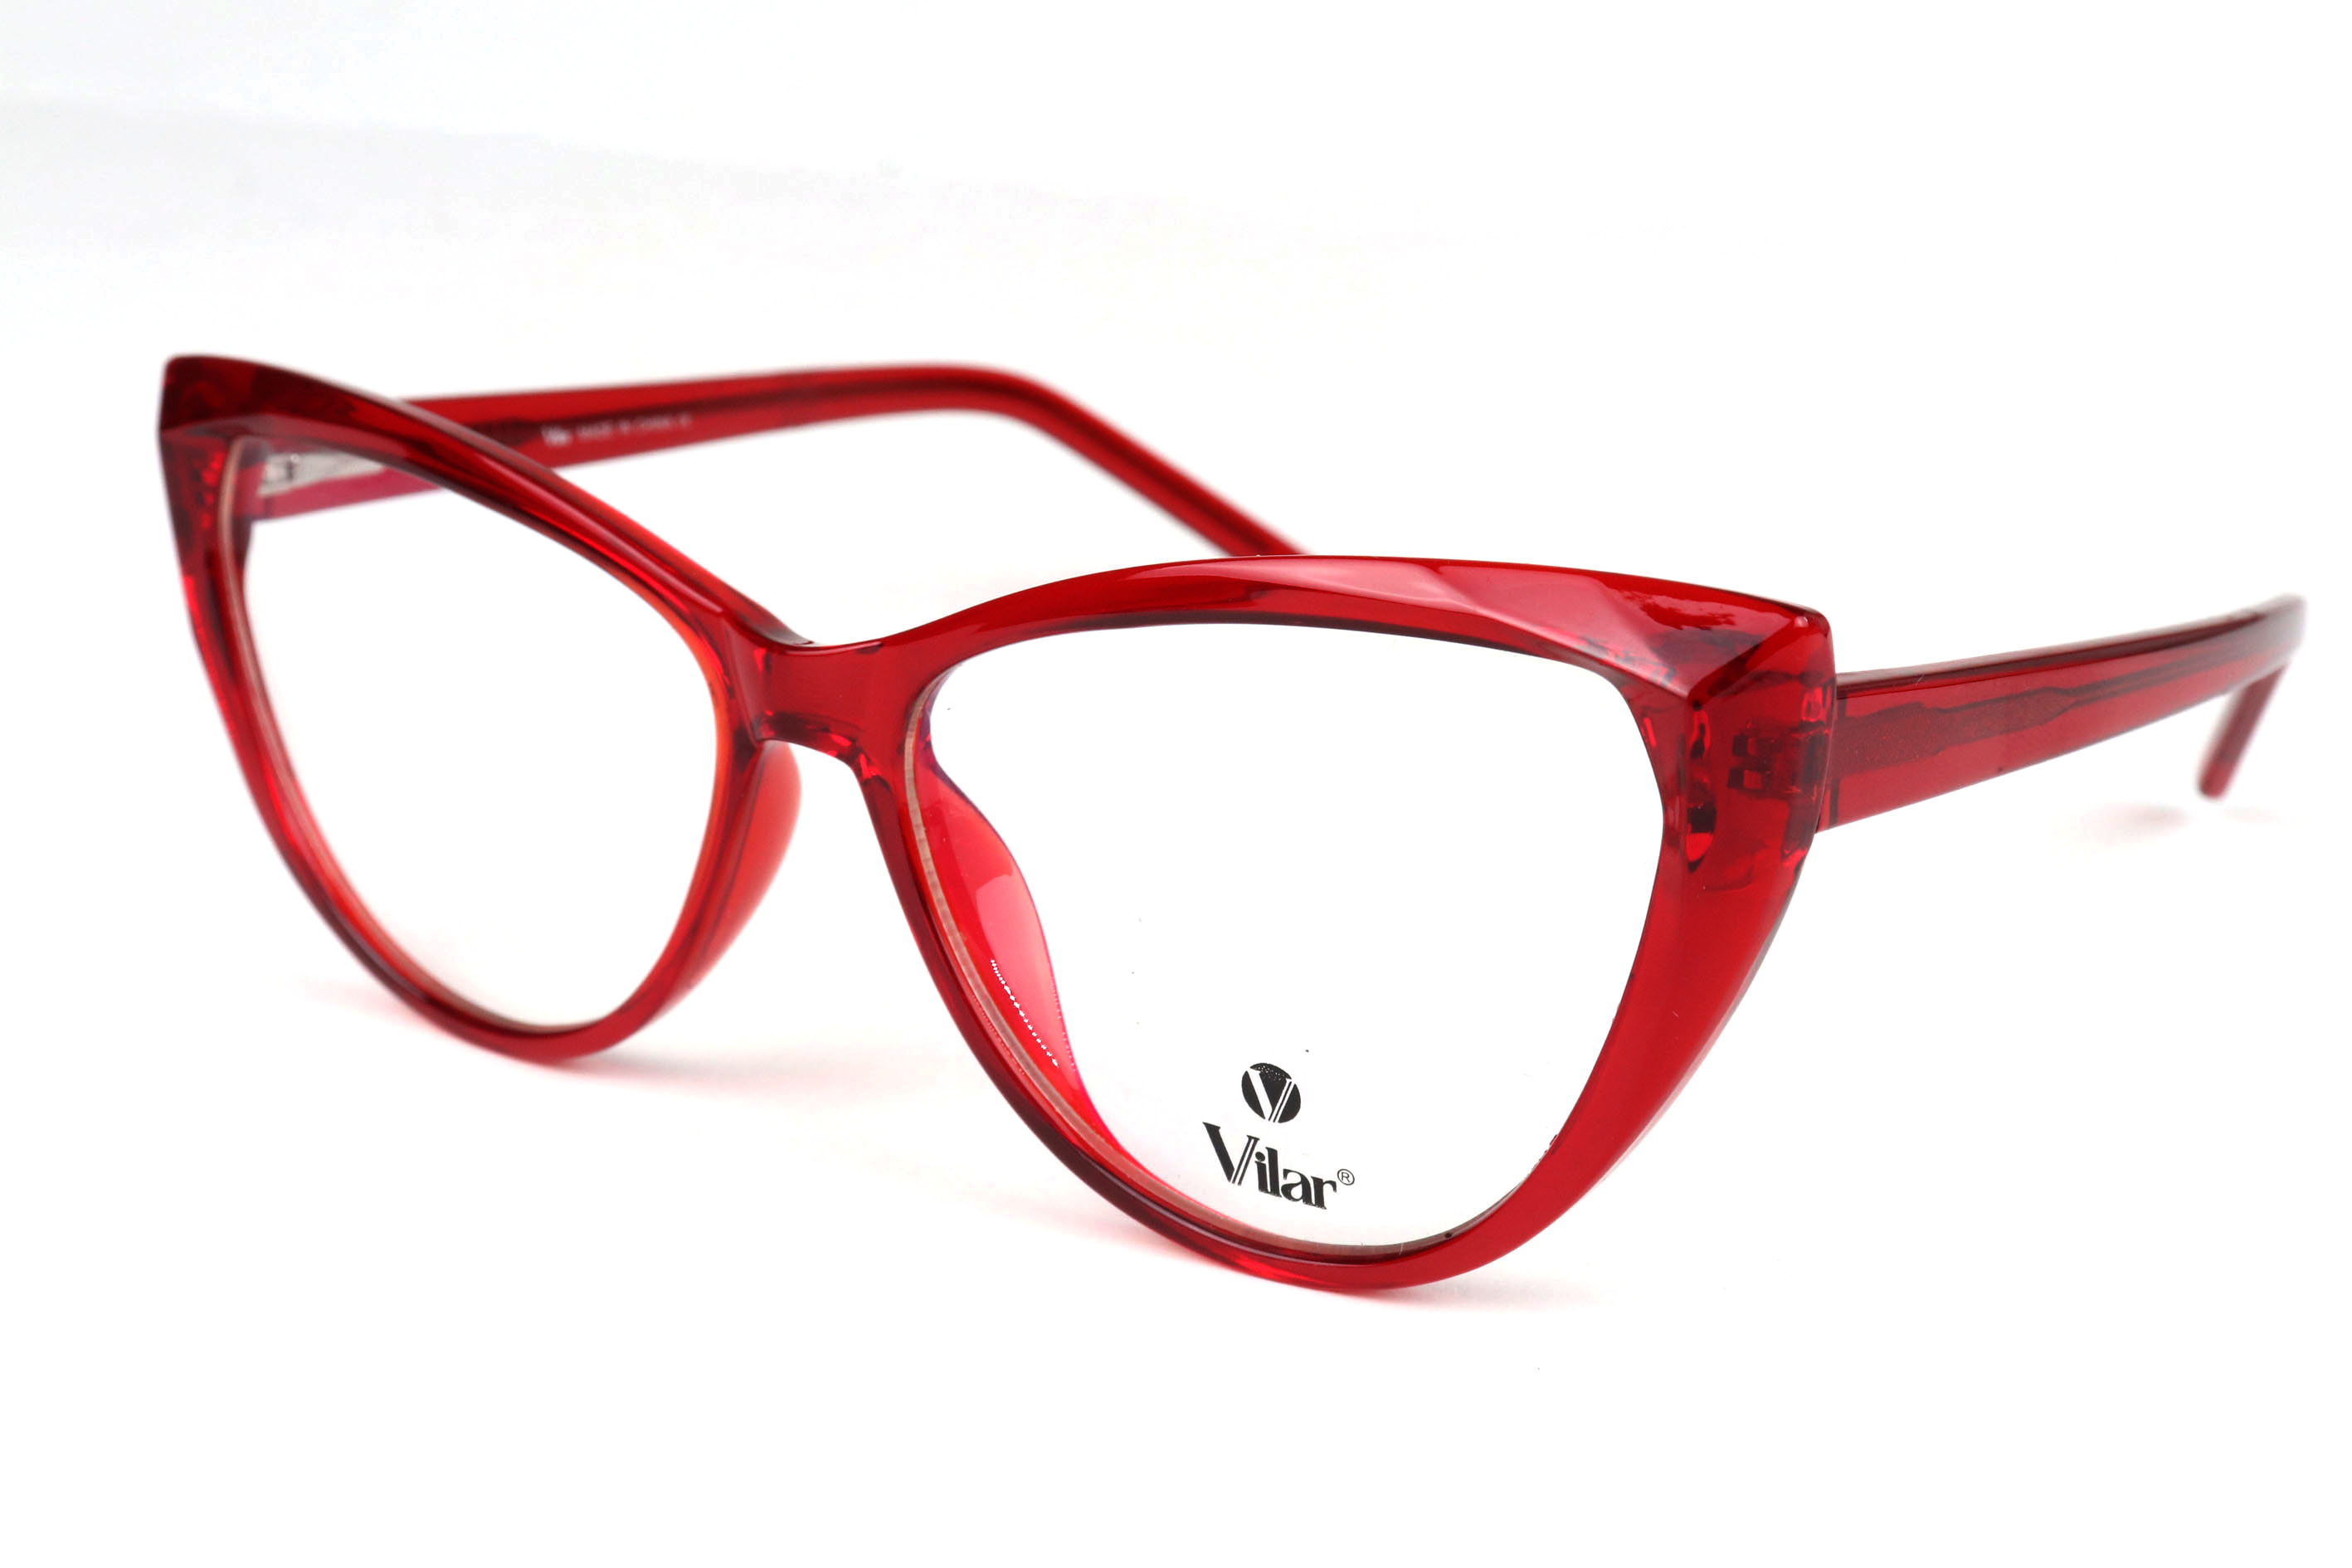 Vilar- Eyeglasses -2003-C6-54-16-147